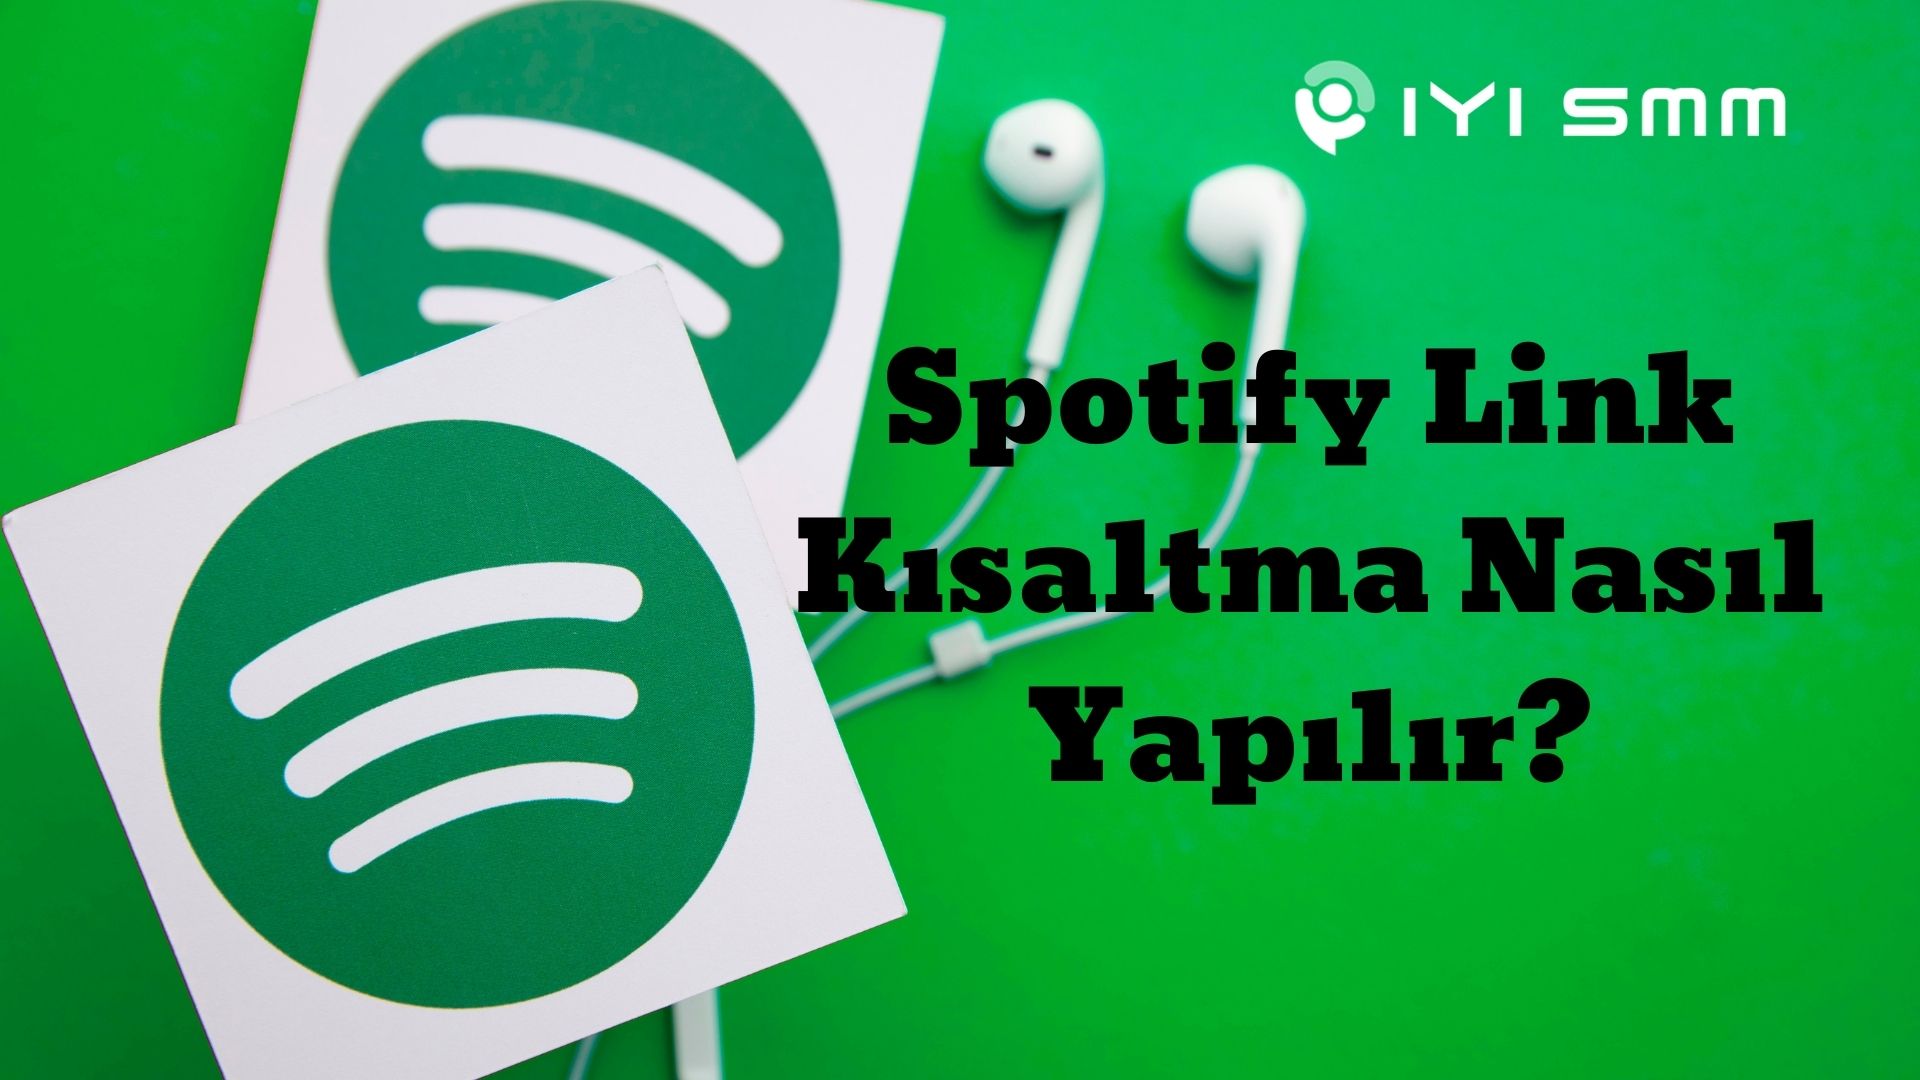 Spotify Link Kisaltma Nasil Yapilir Iyi Sosyal Medya Marketi